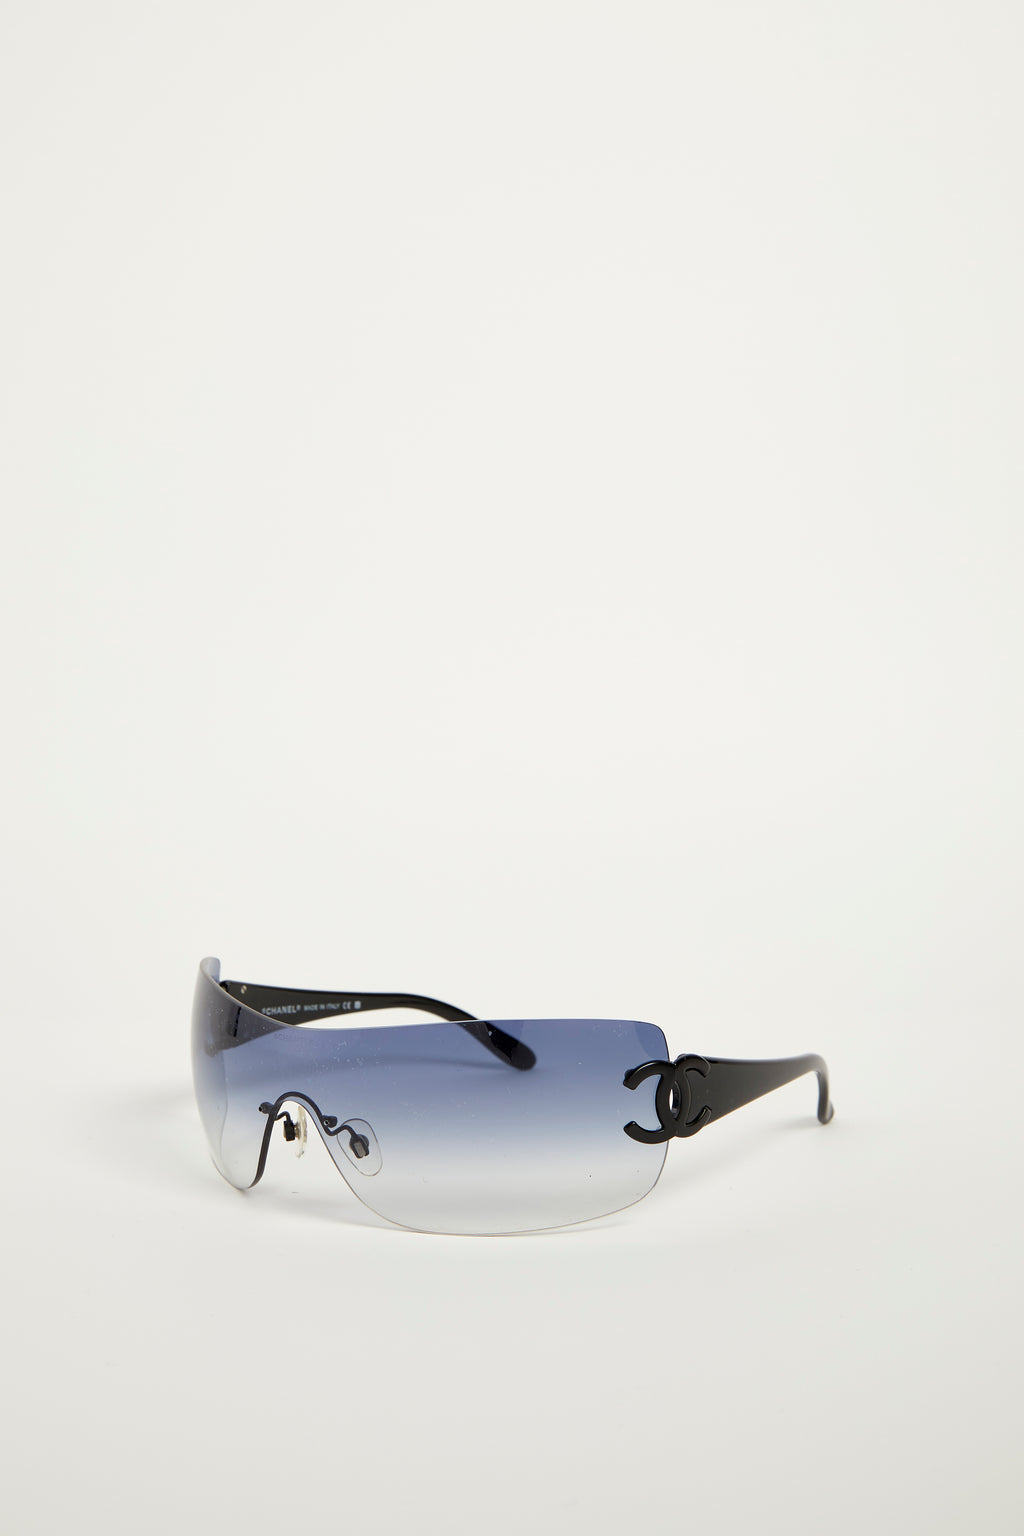 2000 Chanel Black Sunglasses